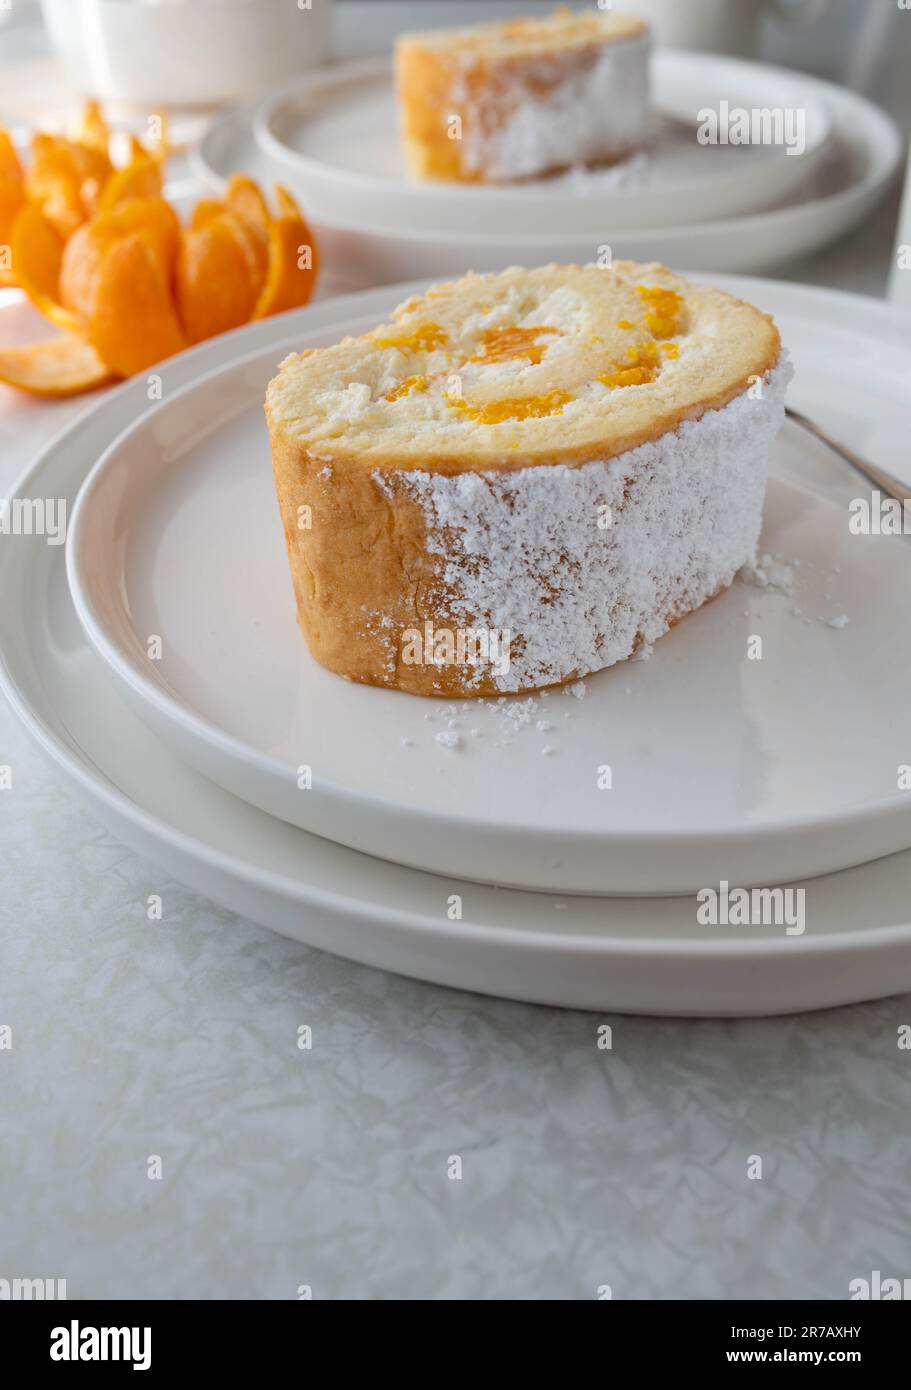 Slice of swiss roll with cream and mandarin oranges Stock Photo